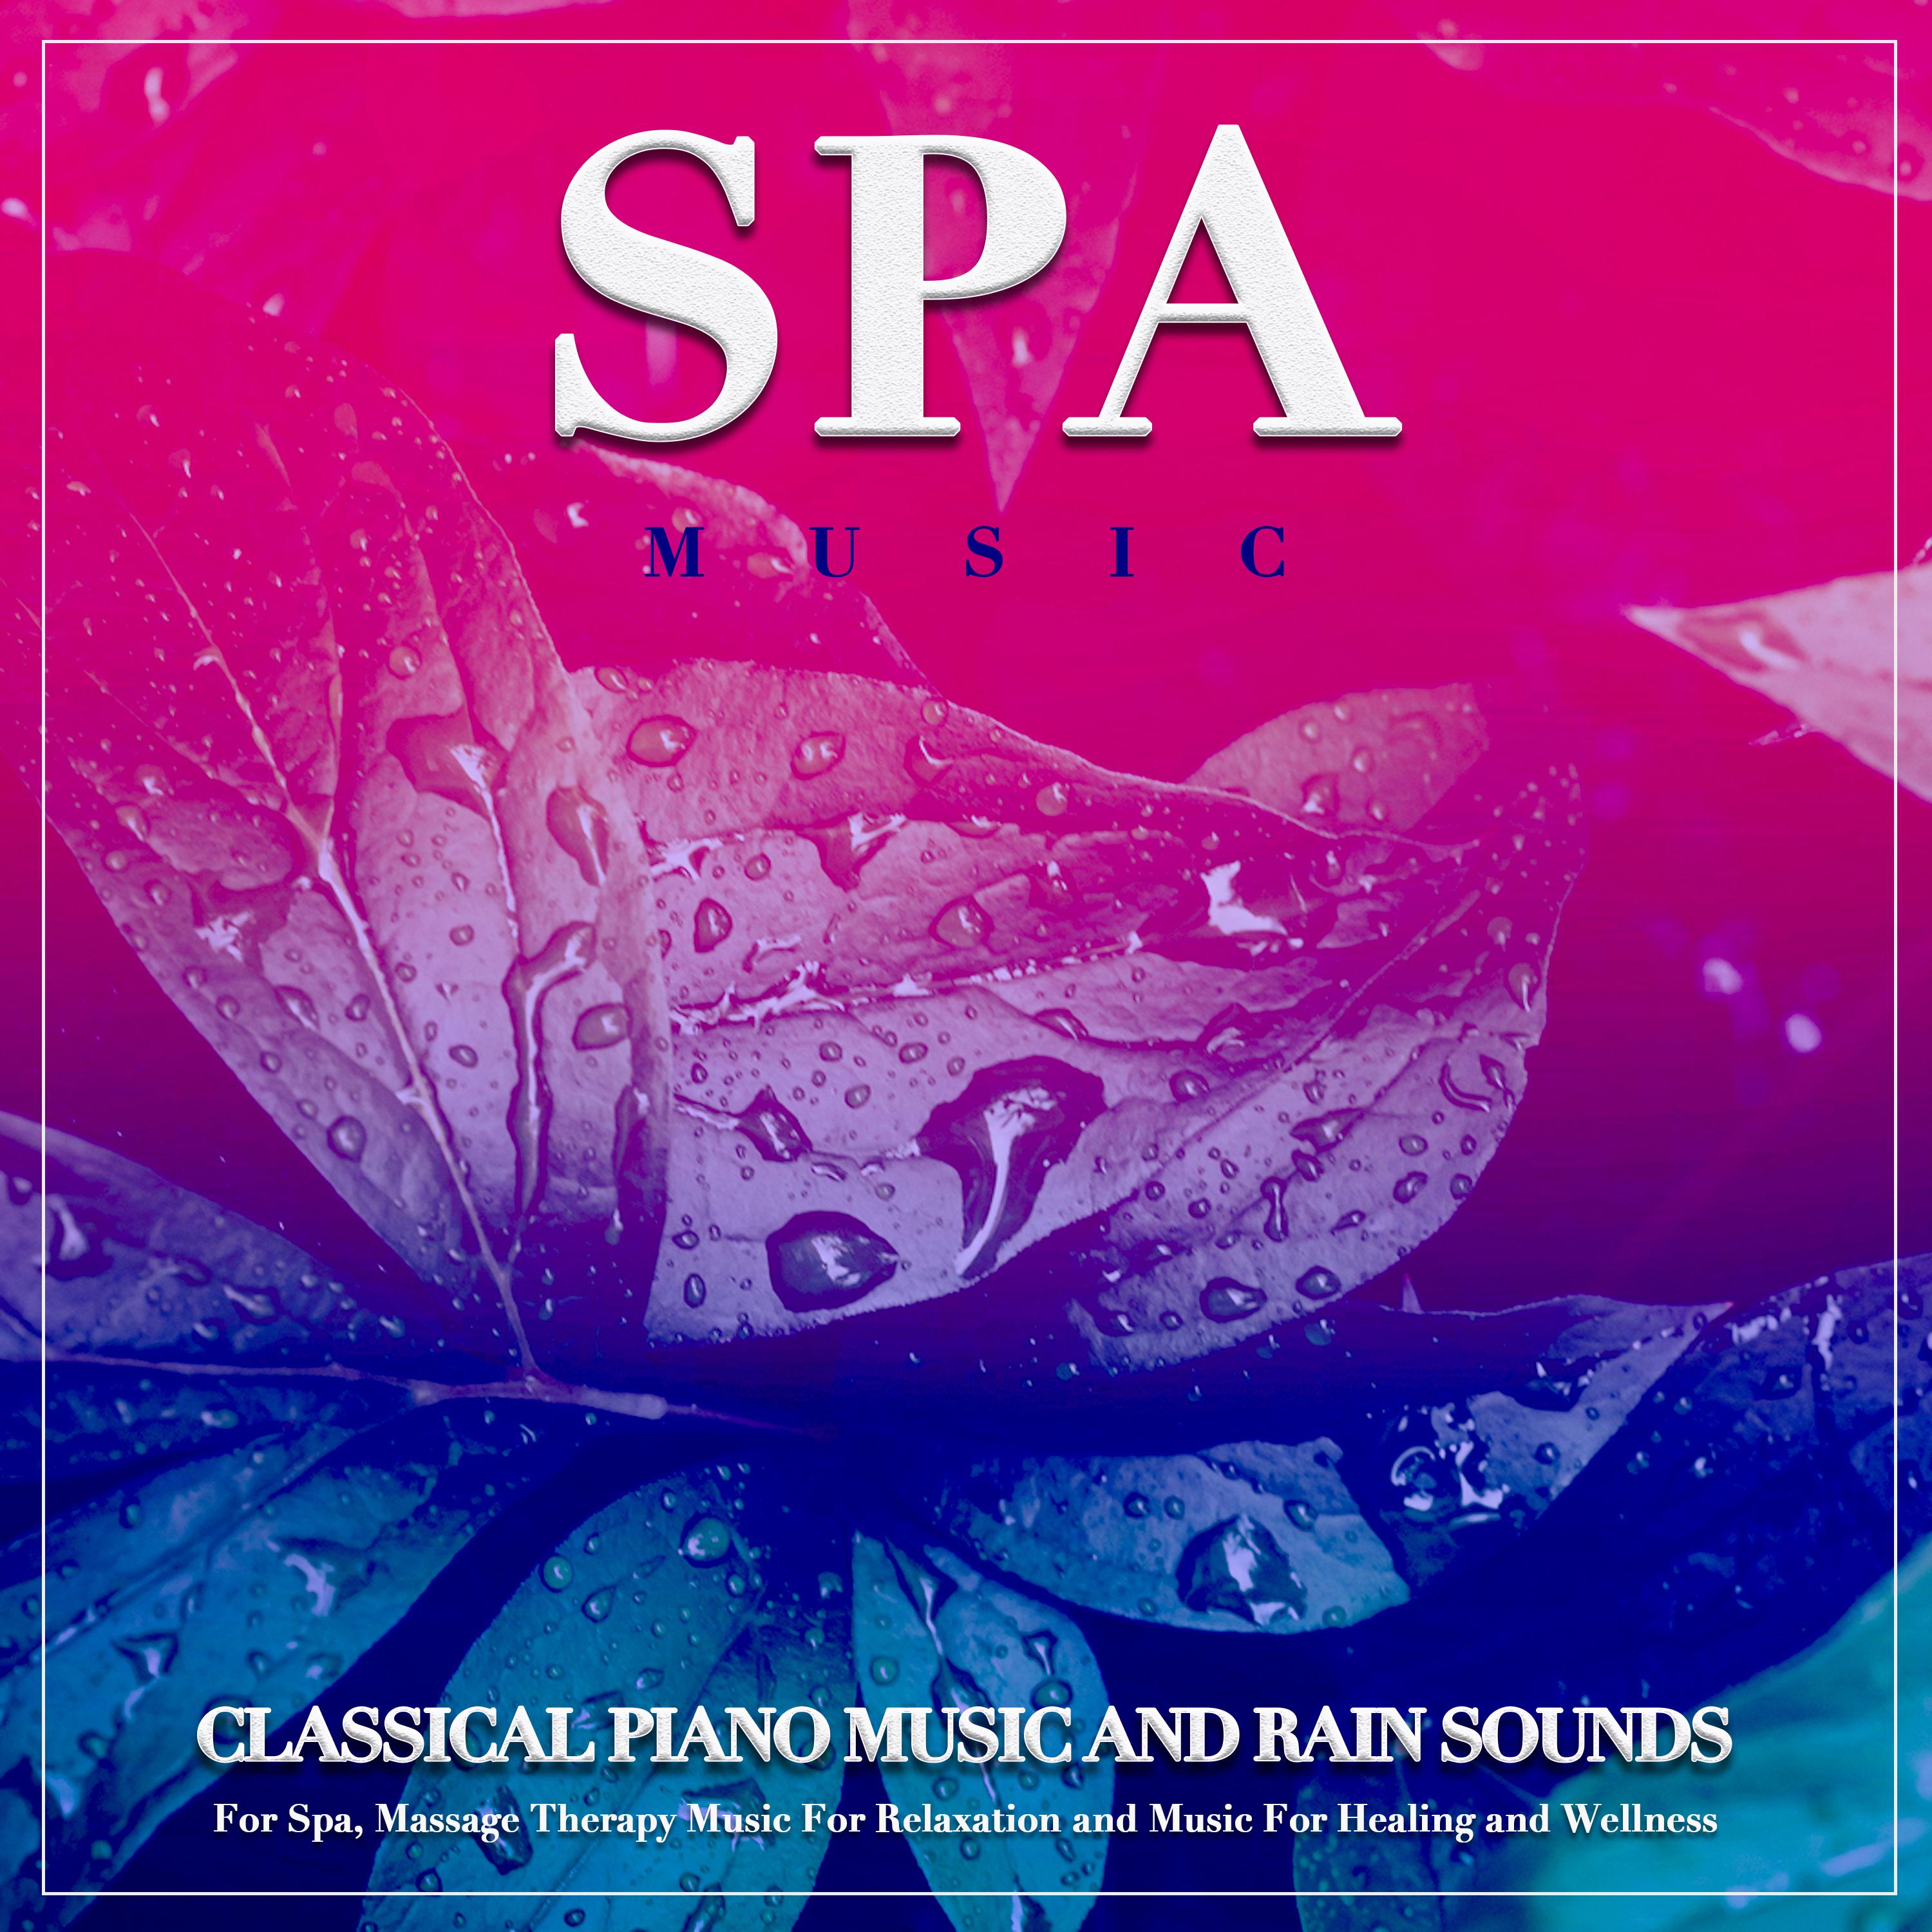 Mazurka - Chopin - Classical Piano and Rain Sounds - Spa Music